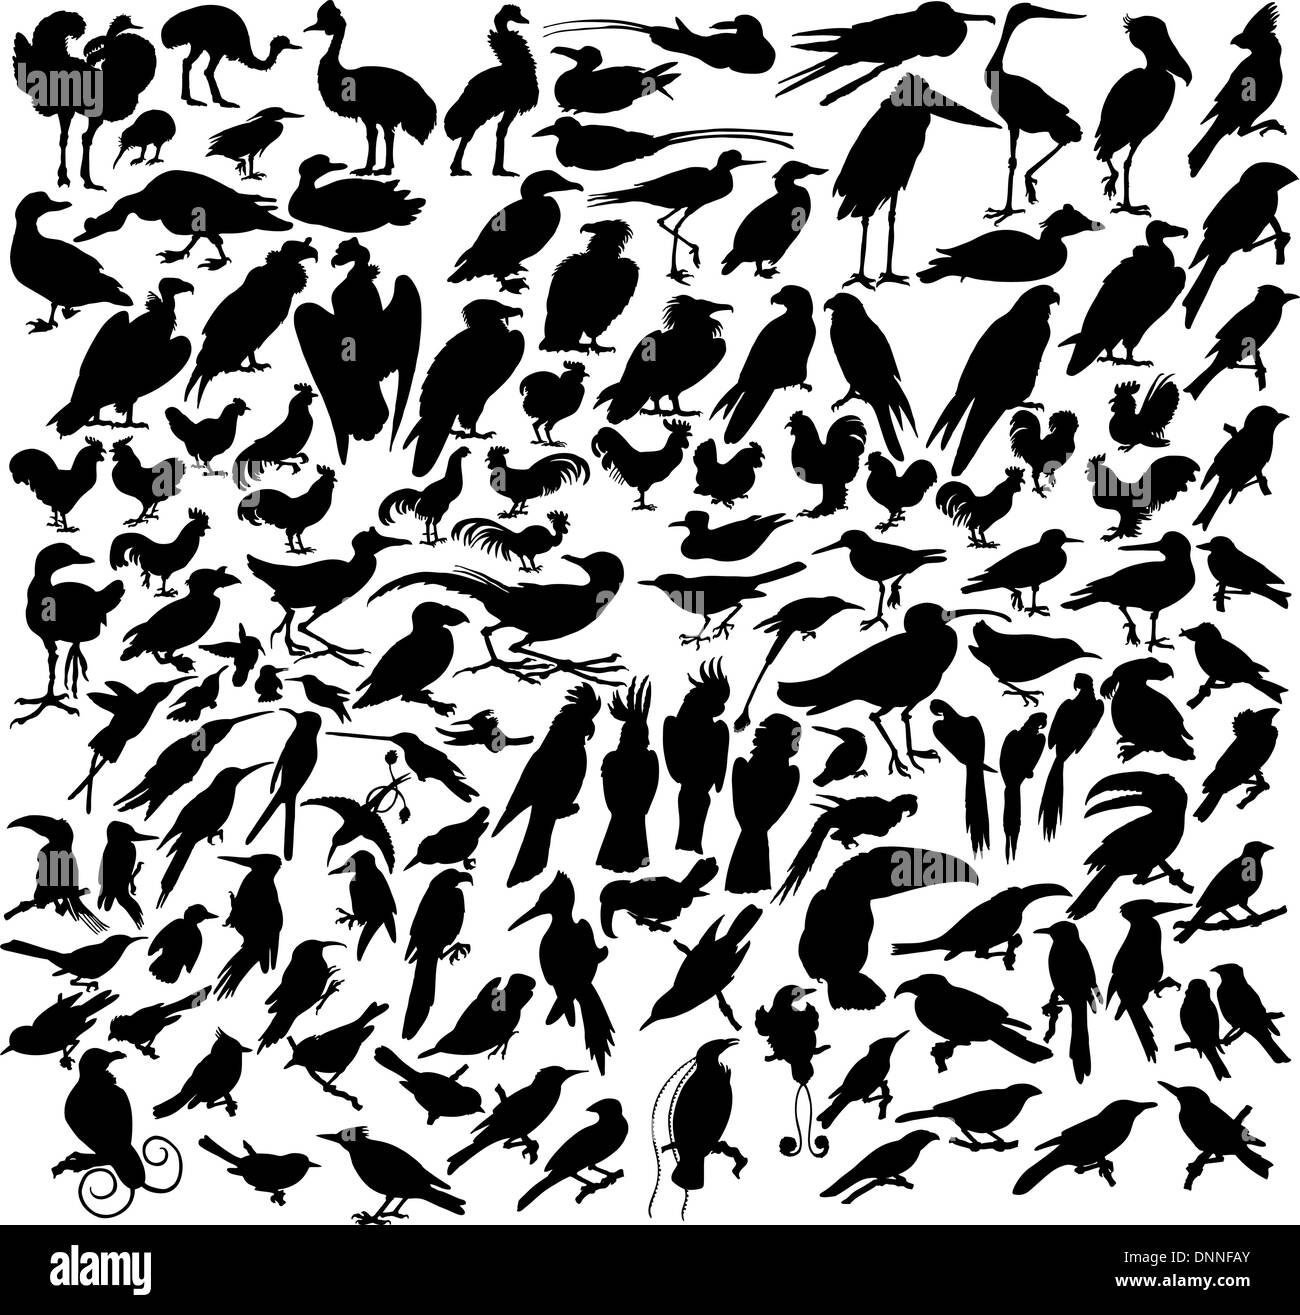 Vector illustrations black silhouettes birds on white Stock Vector